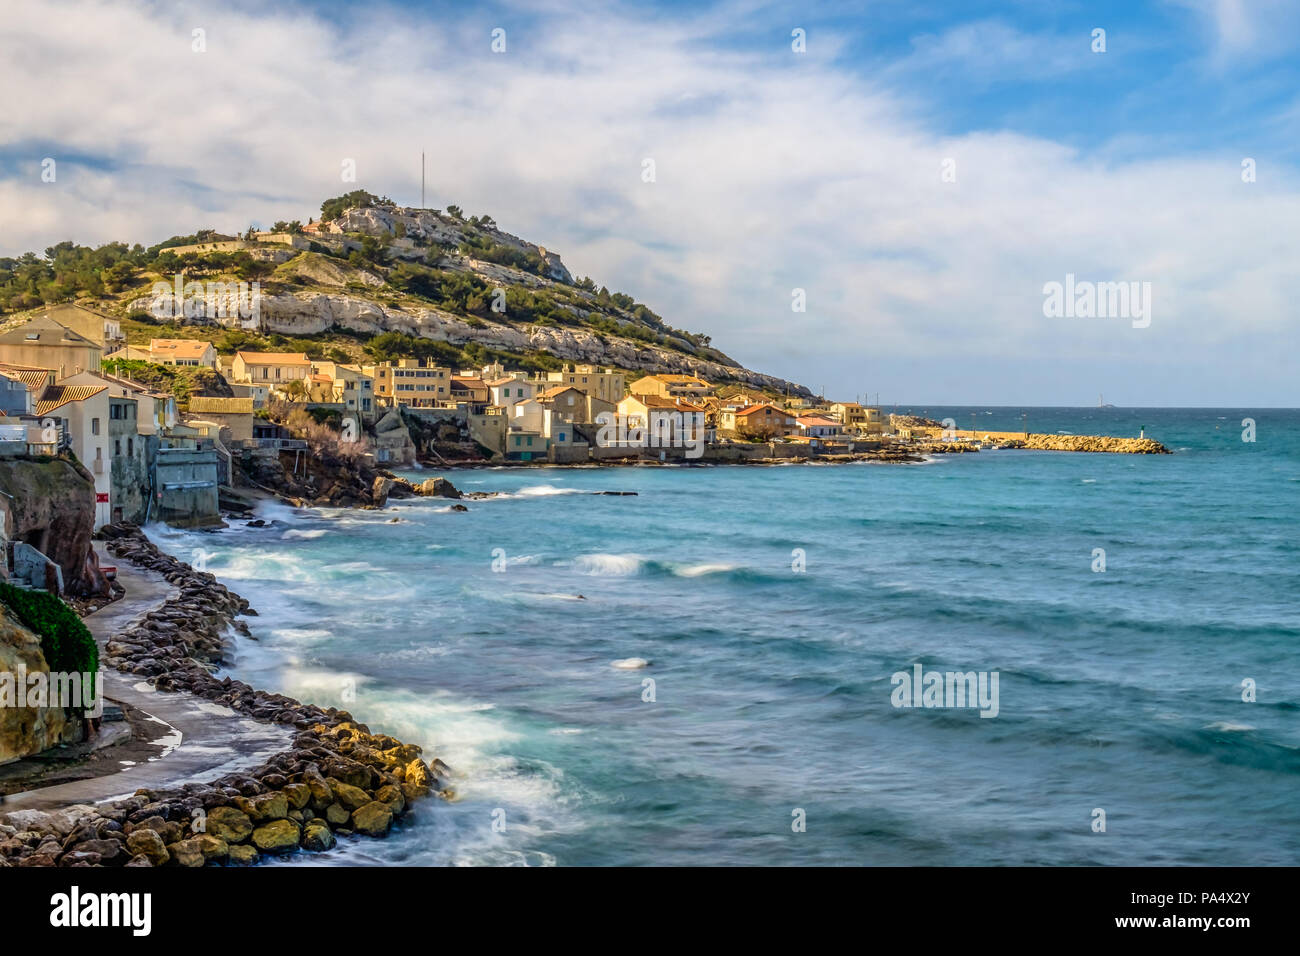 Marseille coastline by the Mediterranean Sea, France Stock Photo